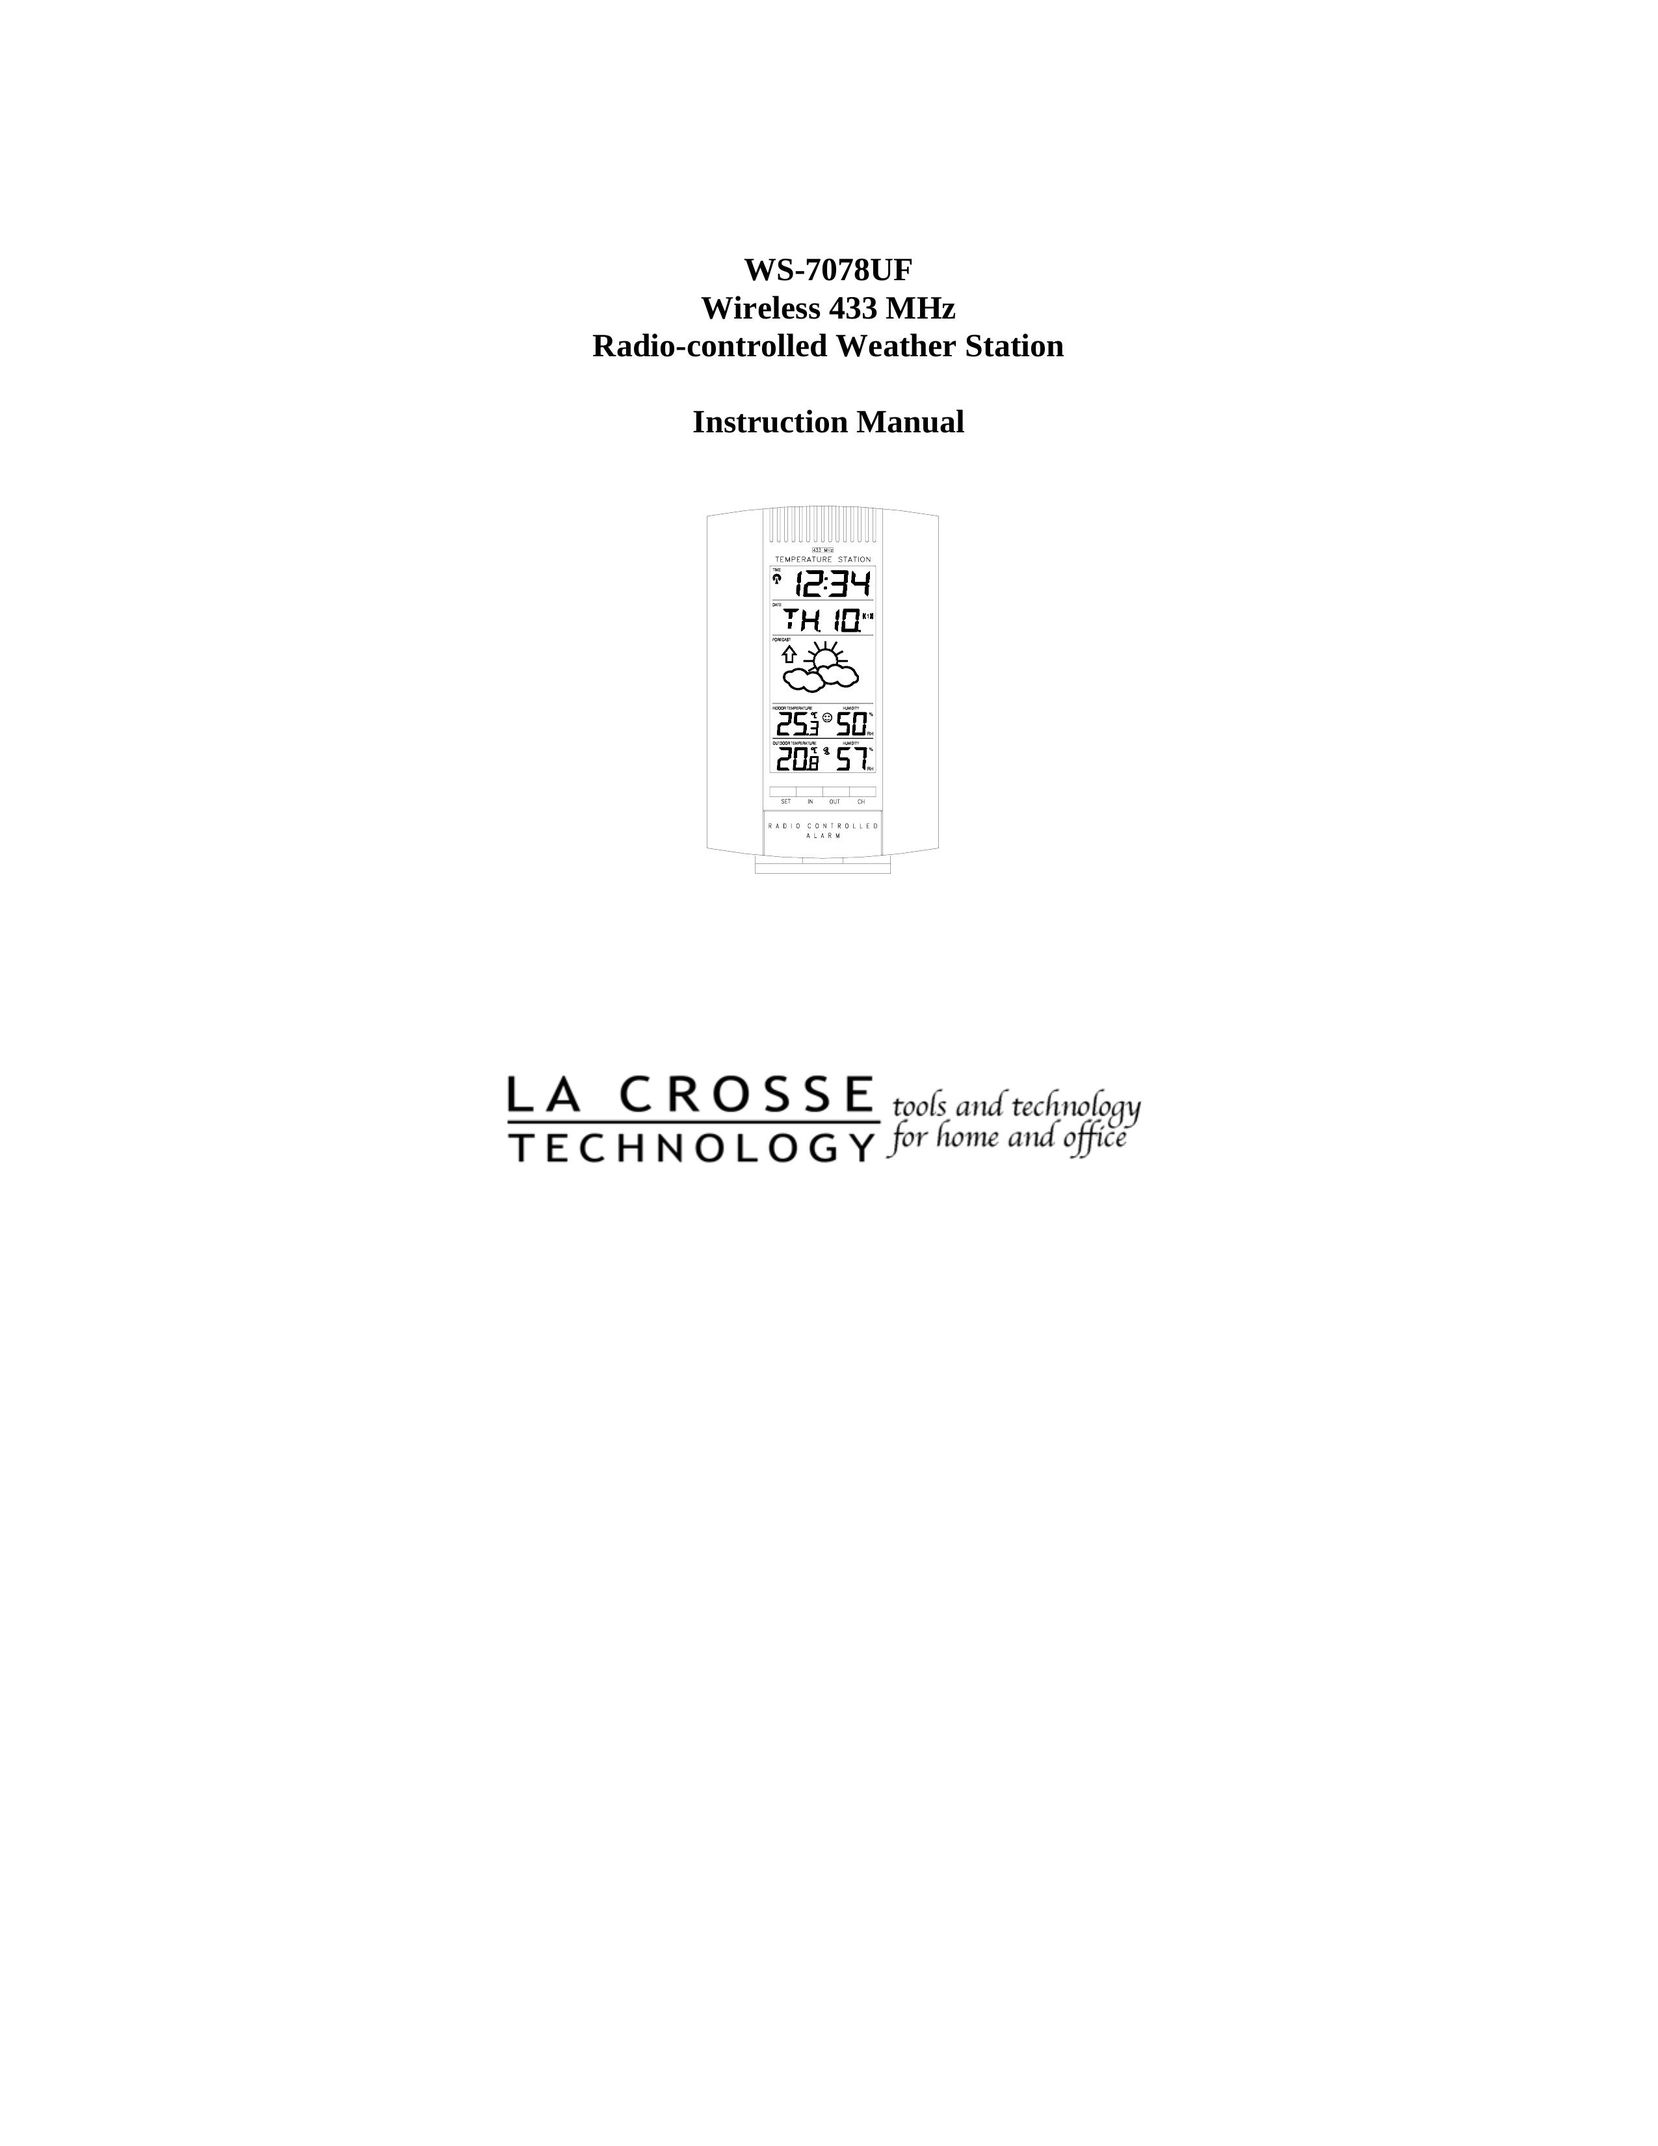 La Crosse Technology WS-7078UF Portable Radio User Manual